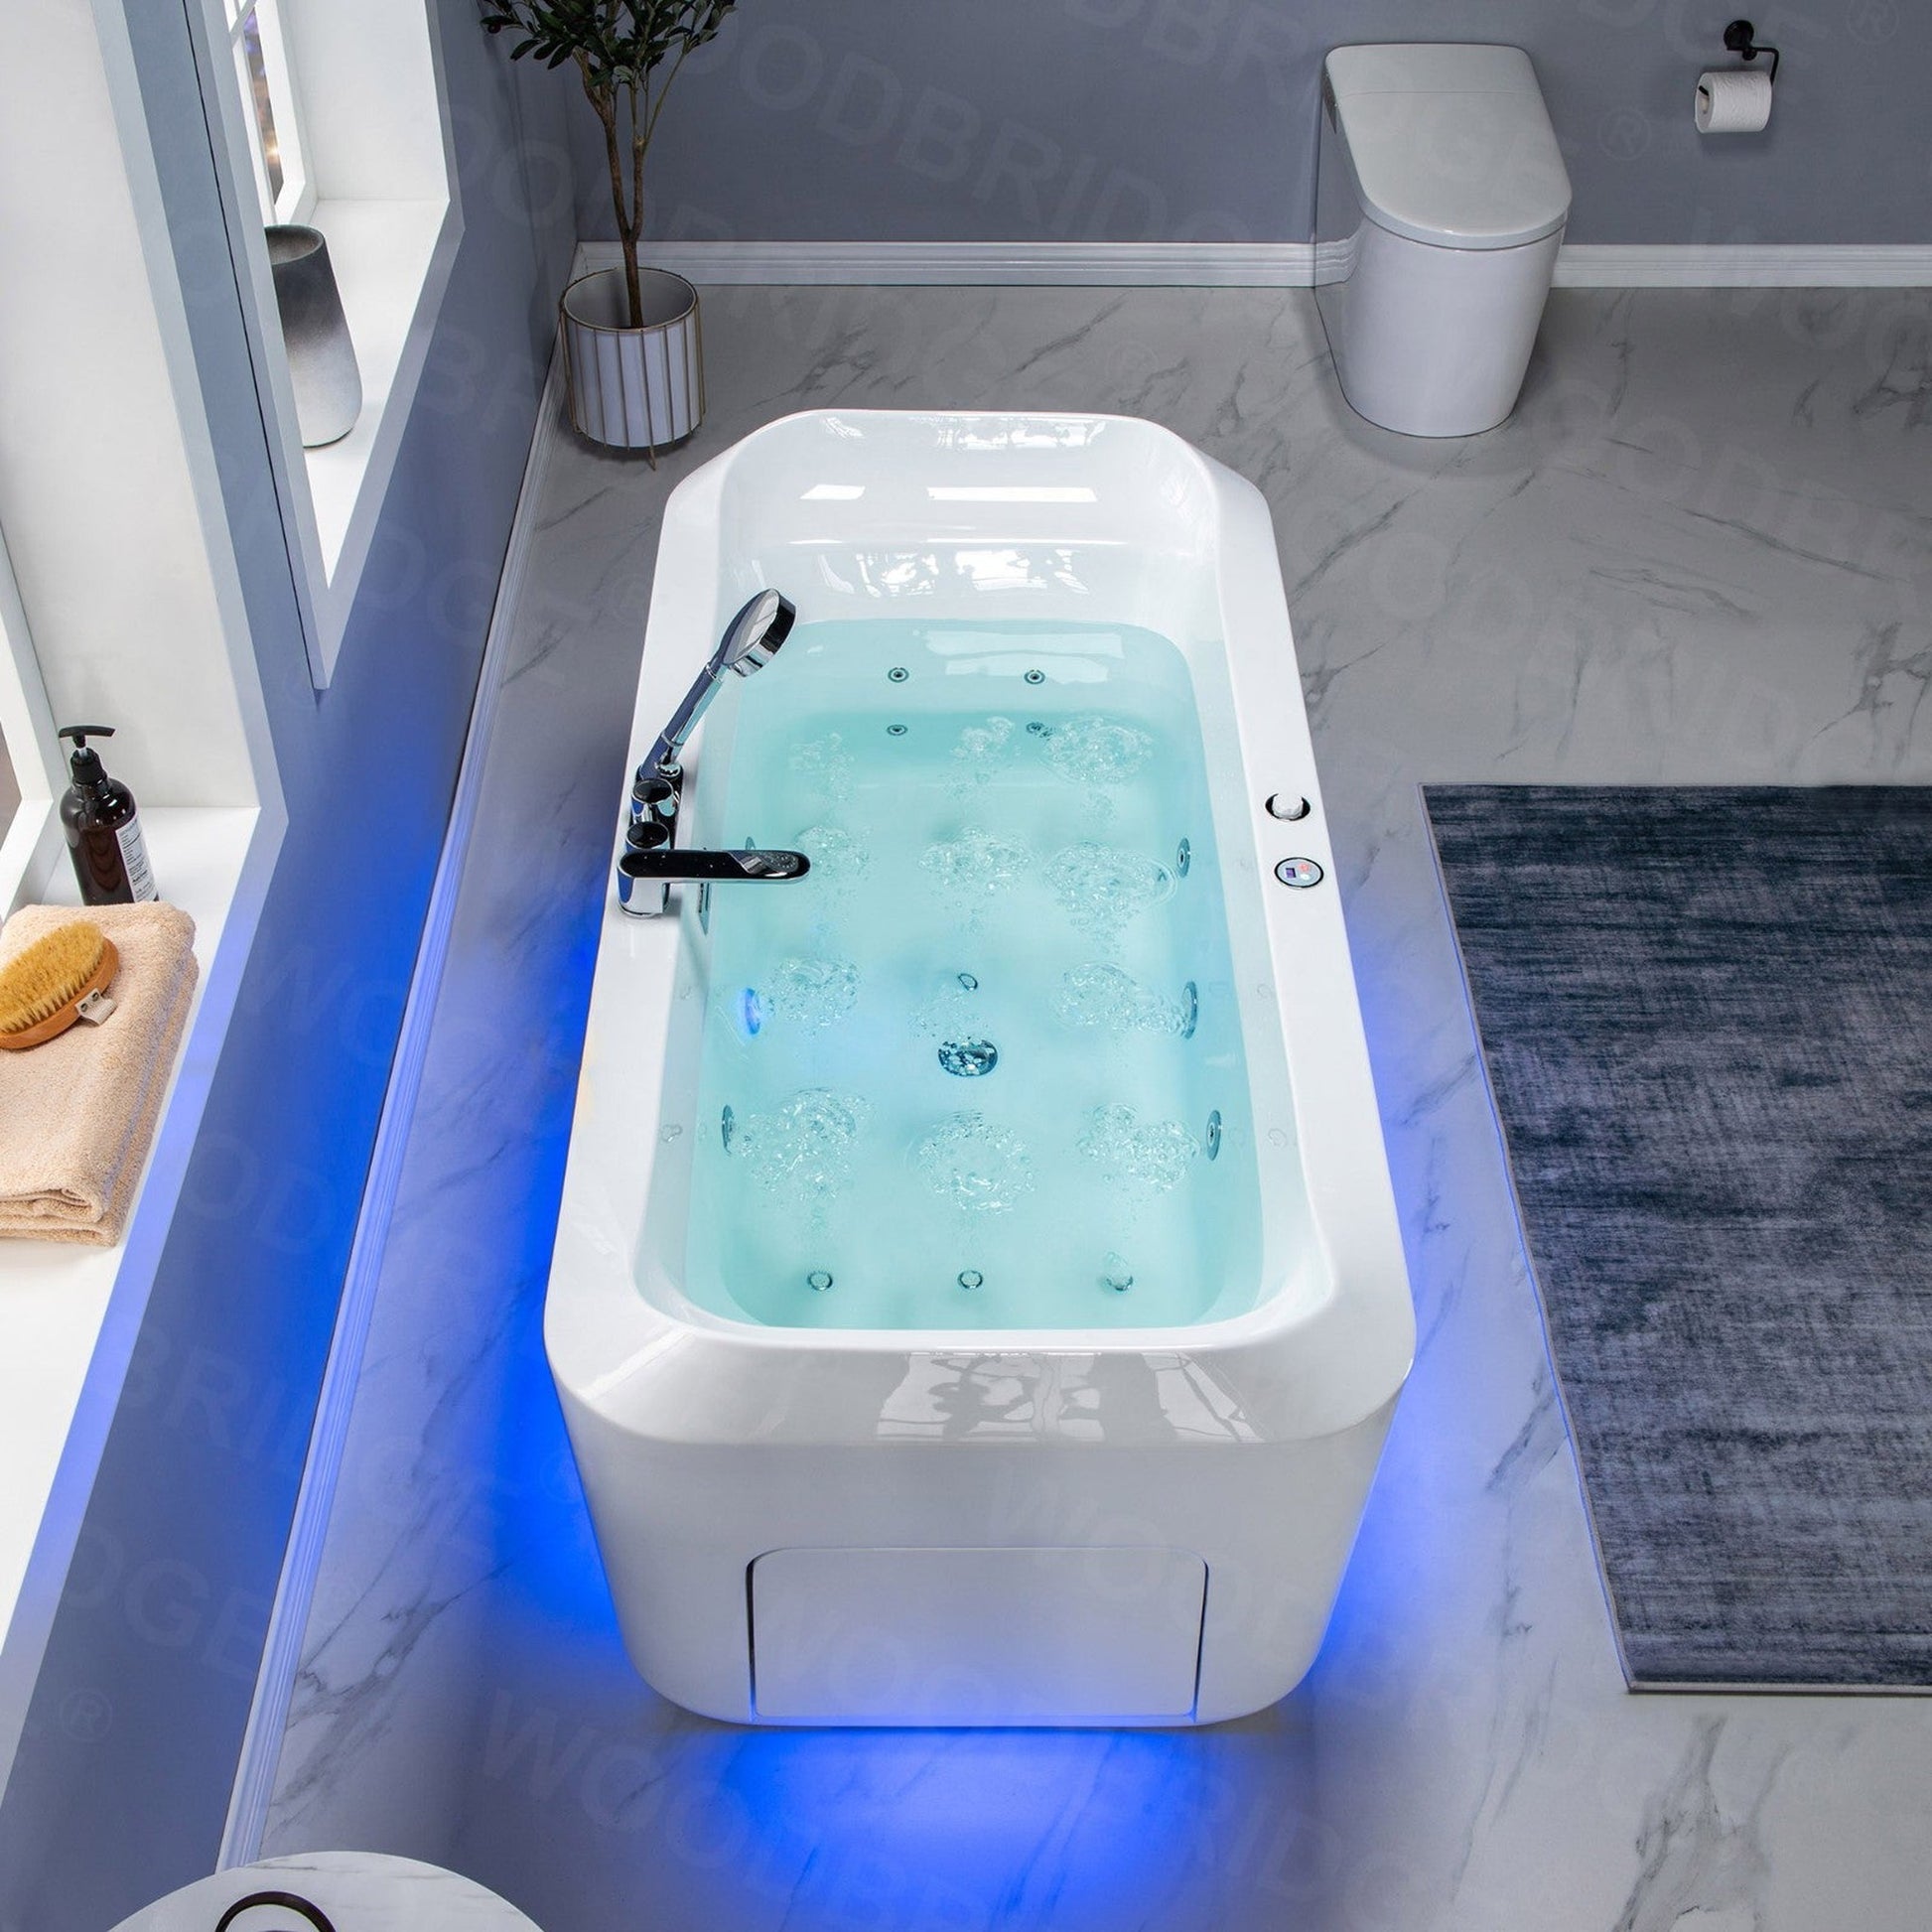 WoodBridge 67" White Acrylic Freestanding Massage Hydrotherapy Bathtub With Inline Heater